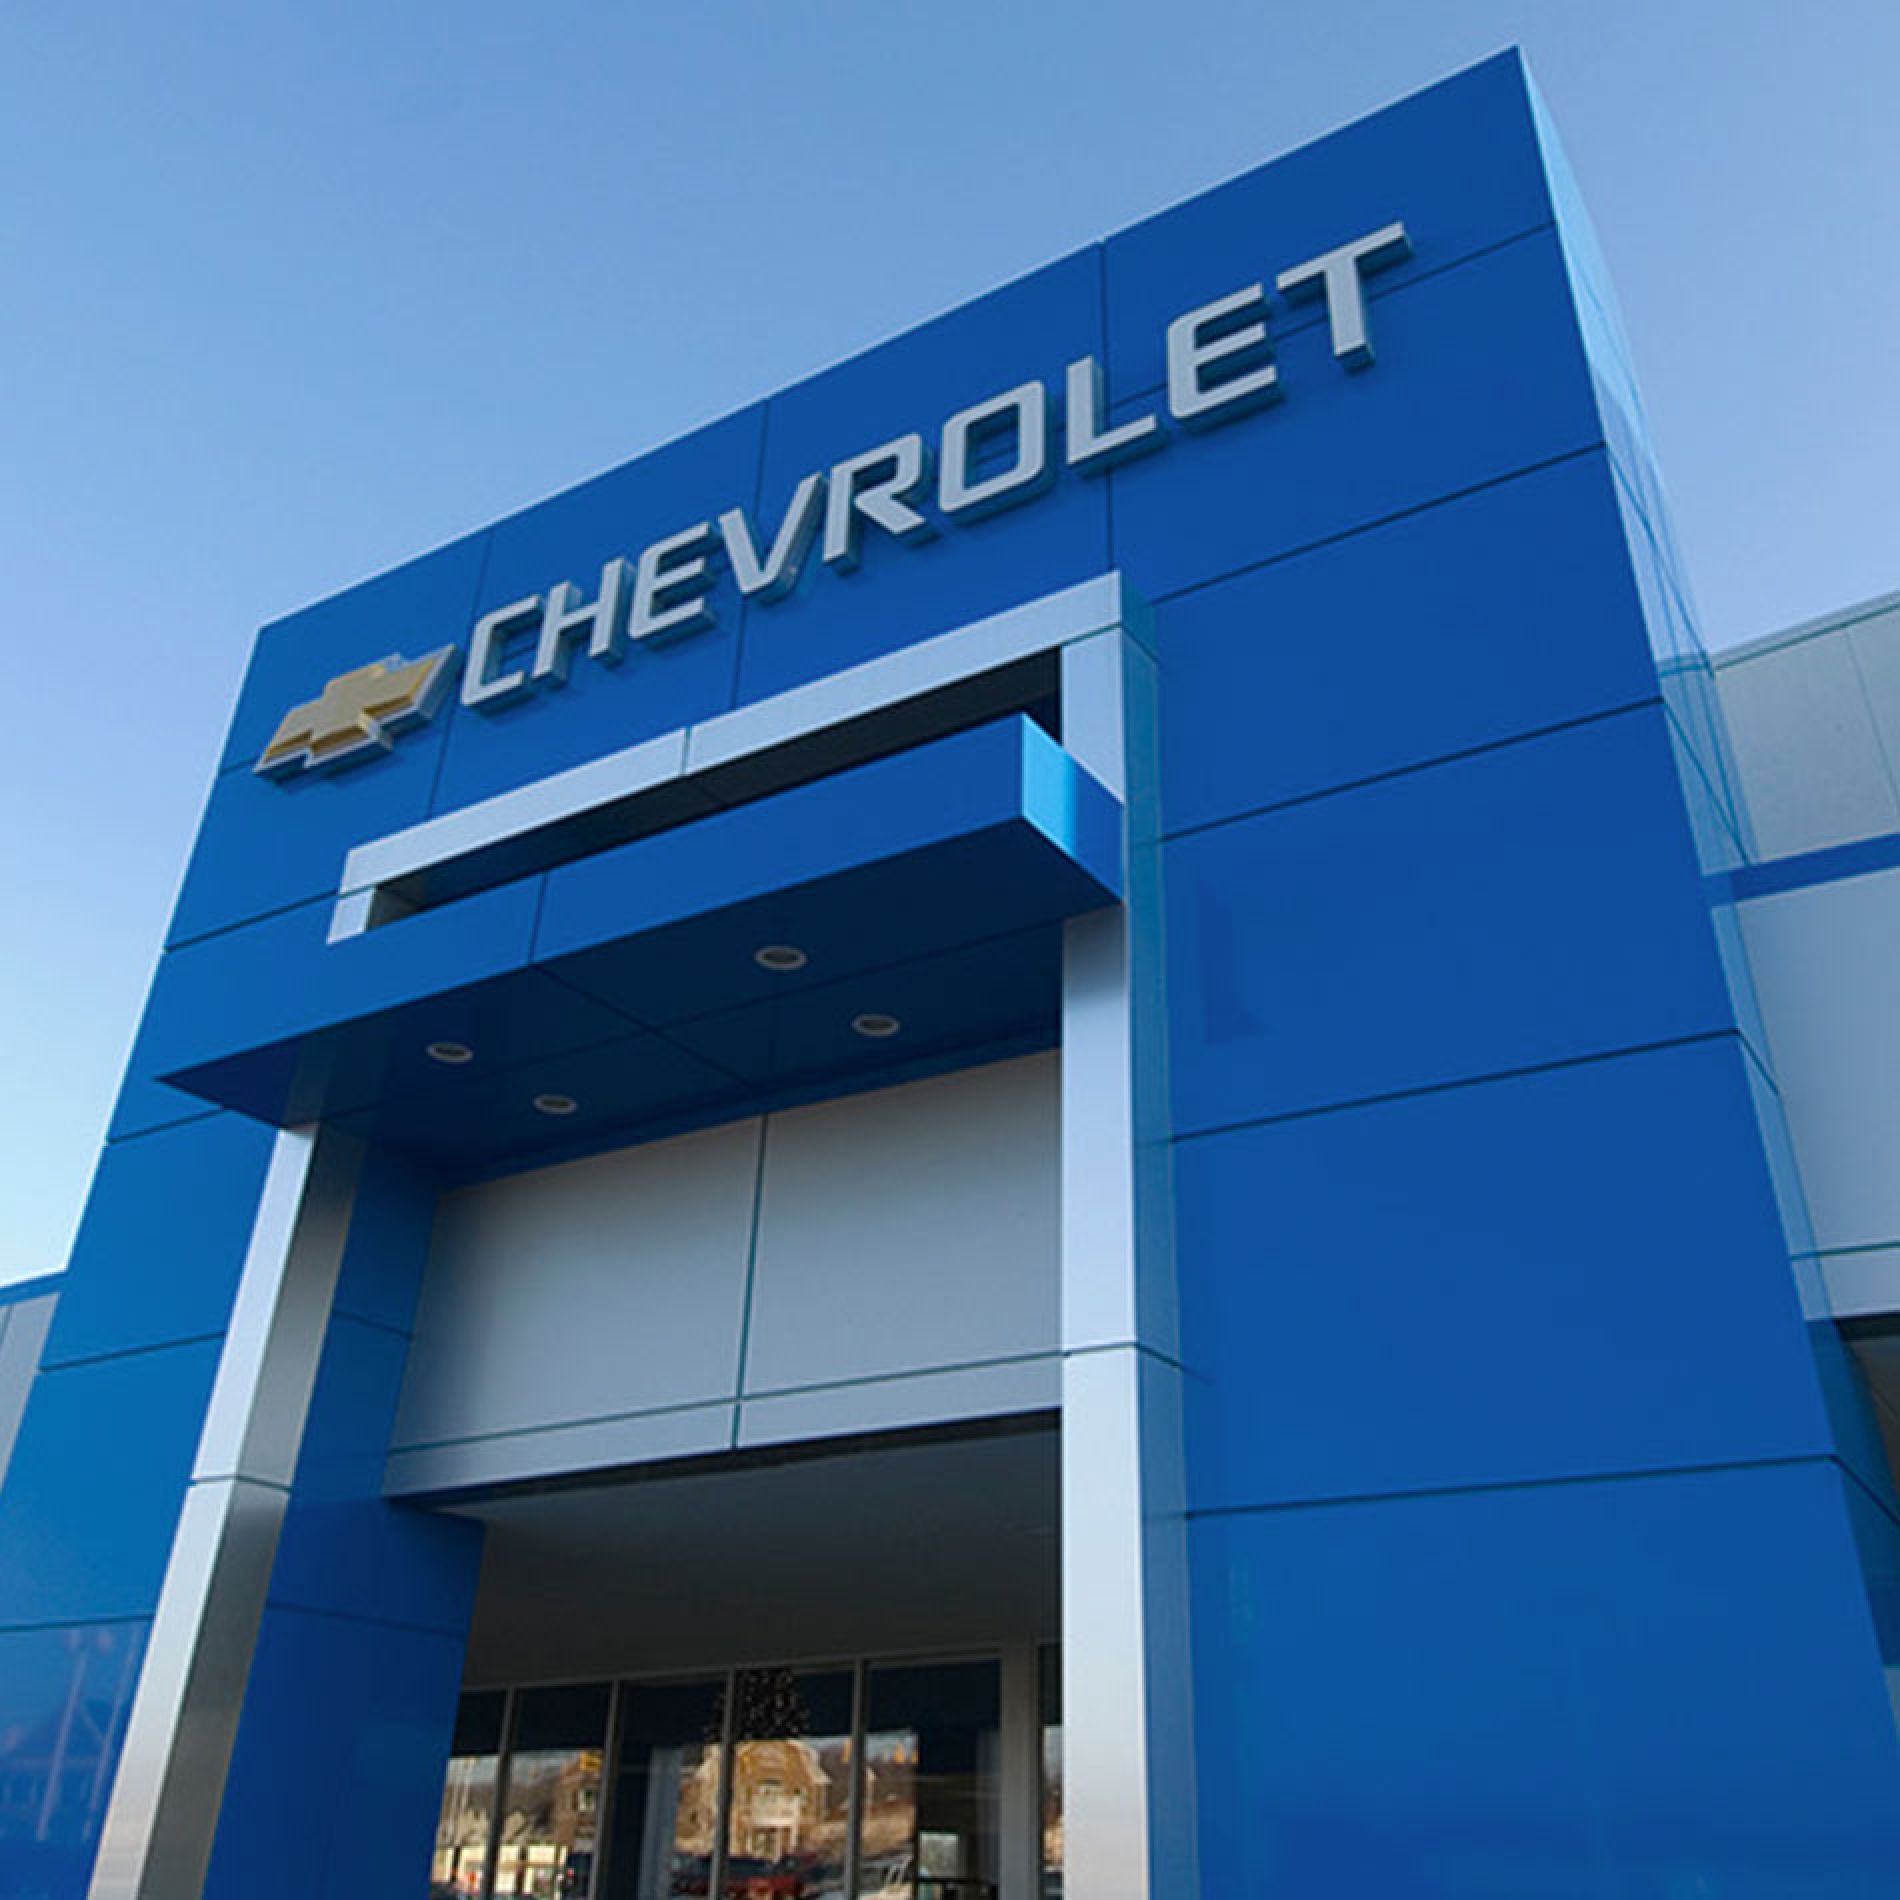 Chevrolet Dealership